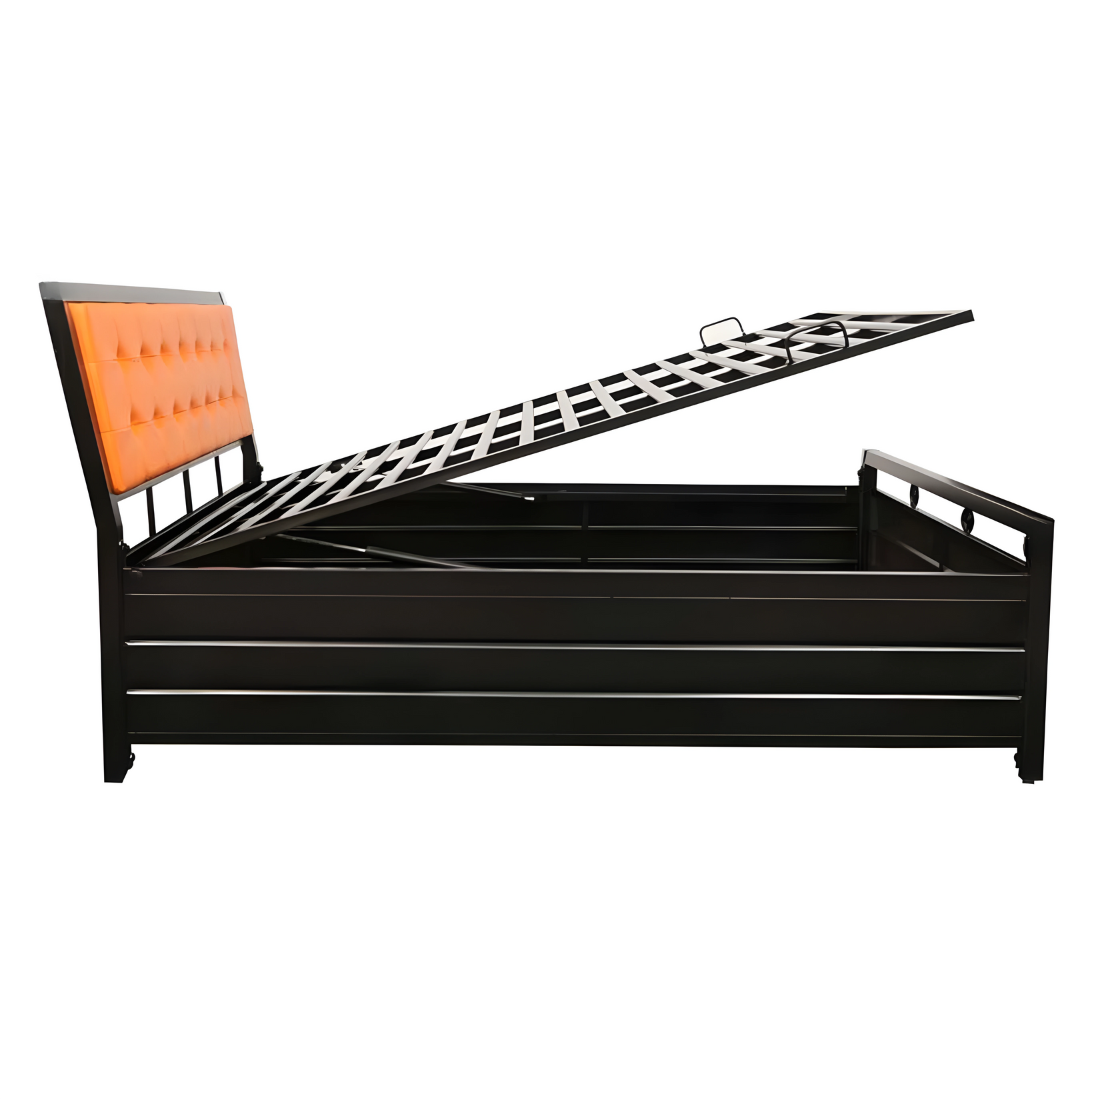 Heath Hydraulic Storage Double Metal Bed with Orange Cushion Headrest (Color - Black)